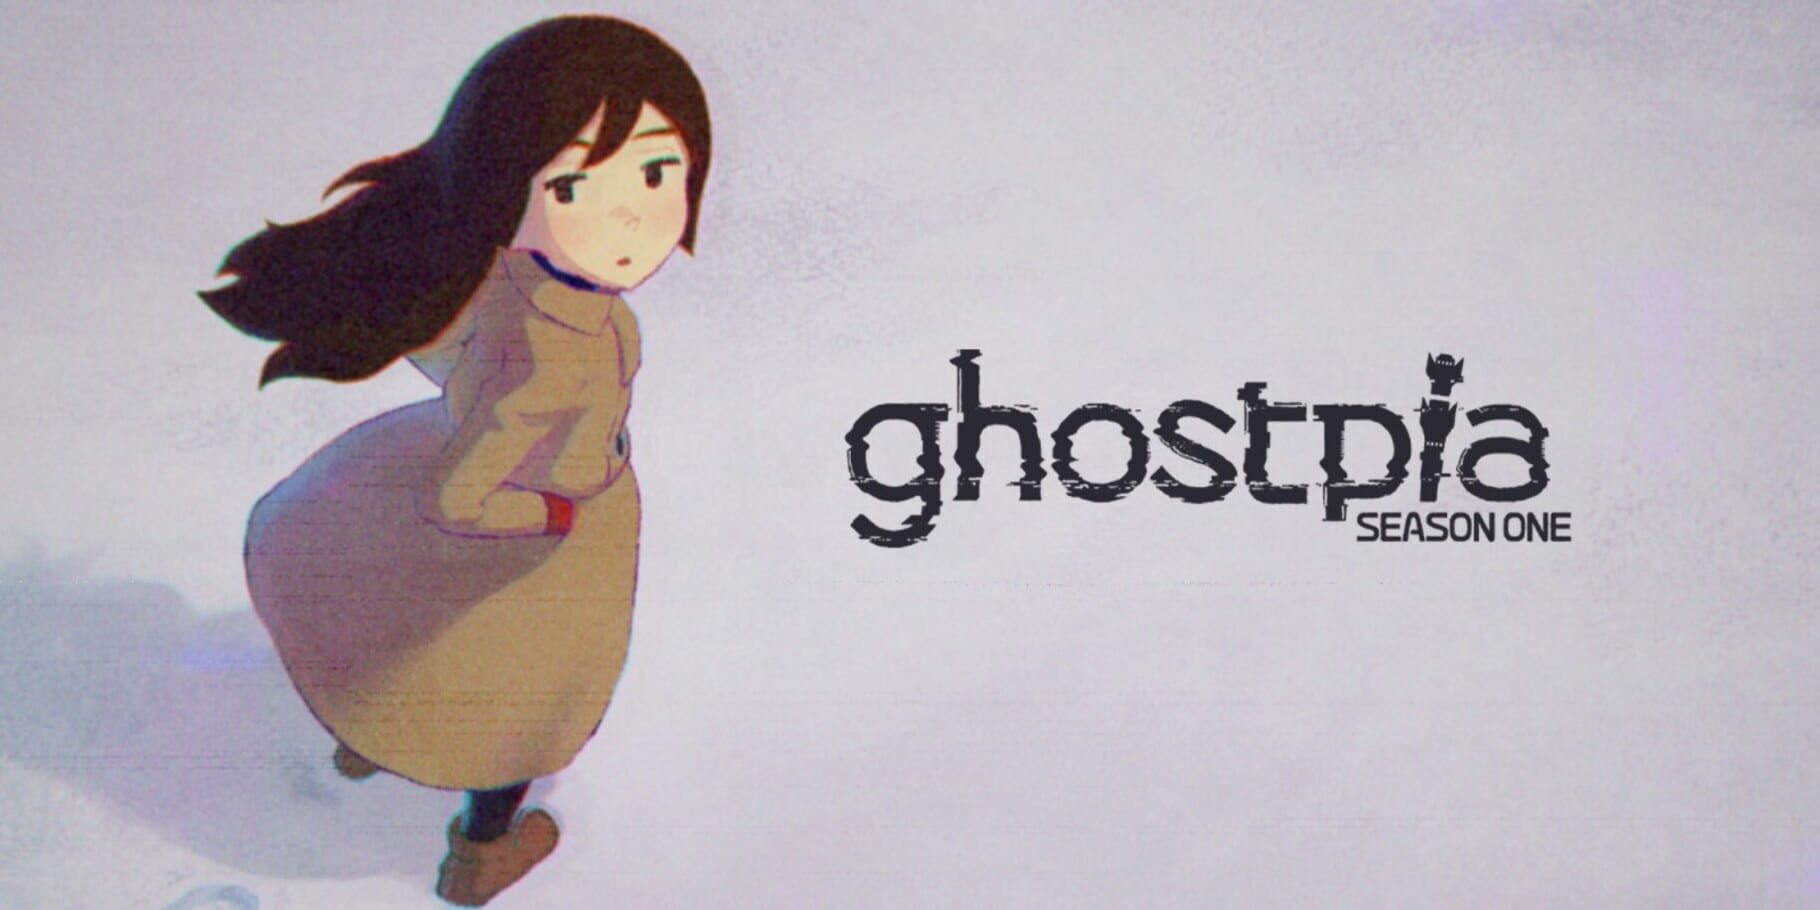 Arte - Ghostpia Season One